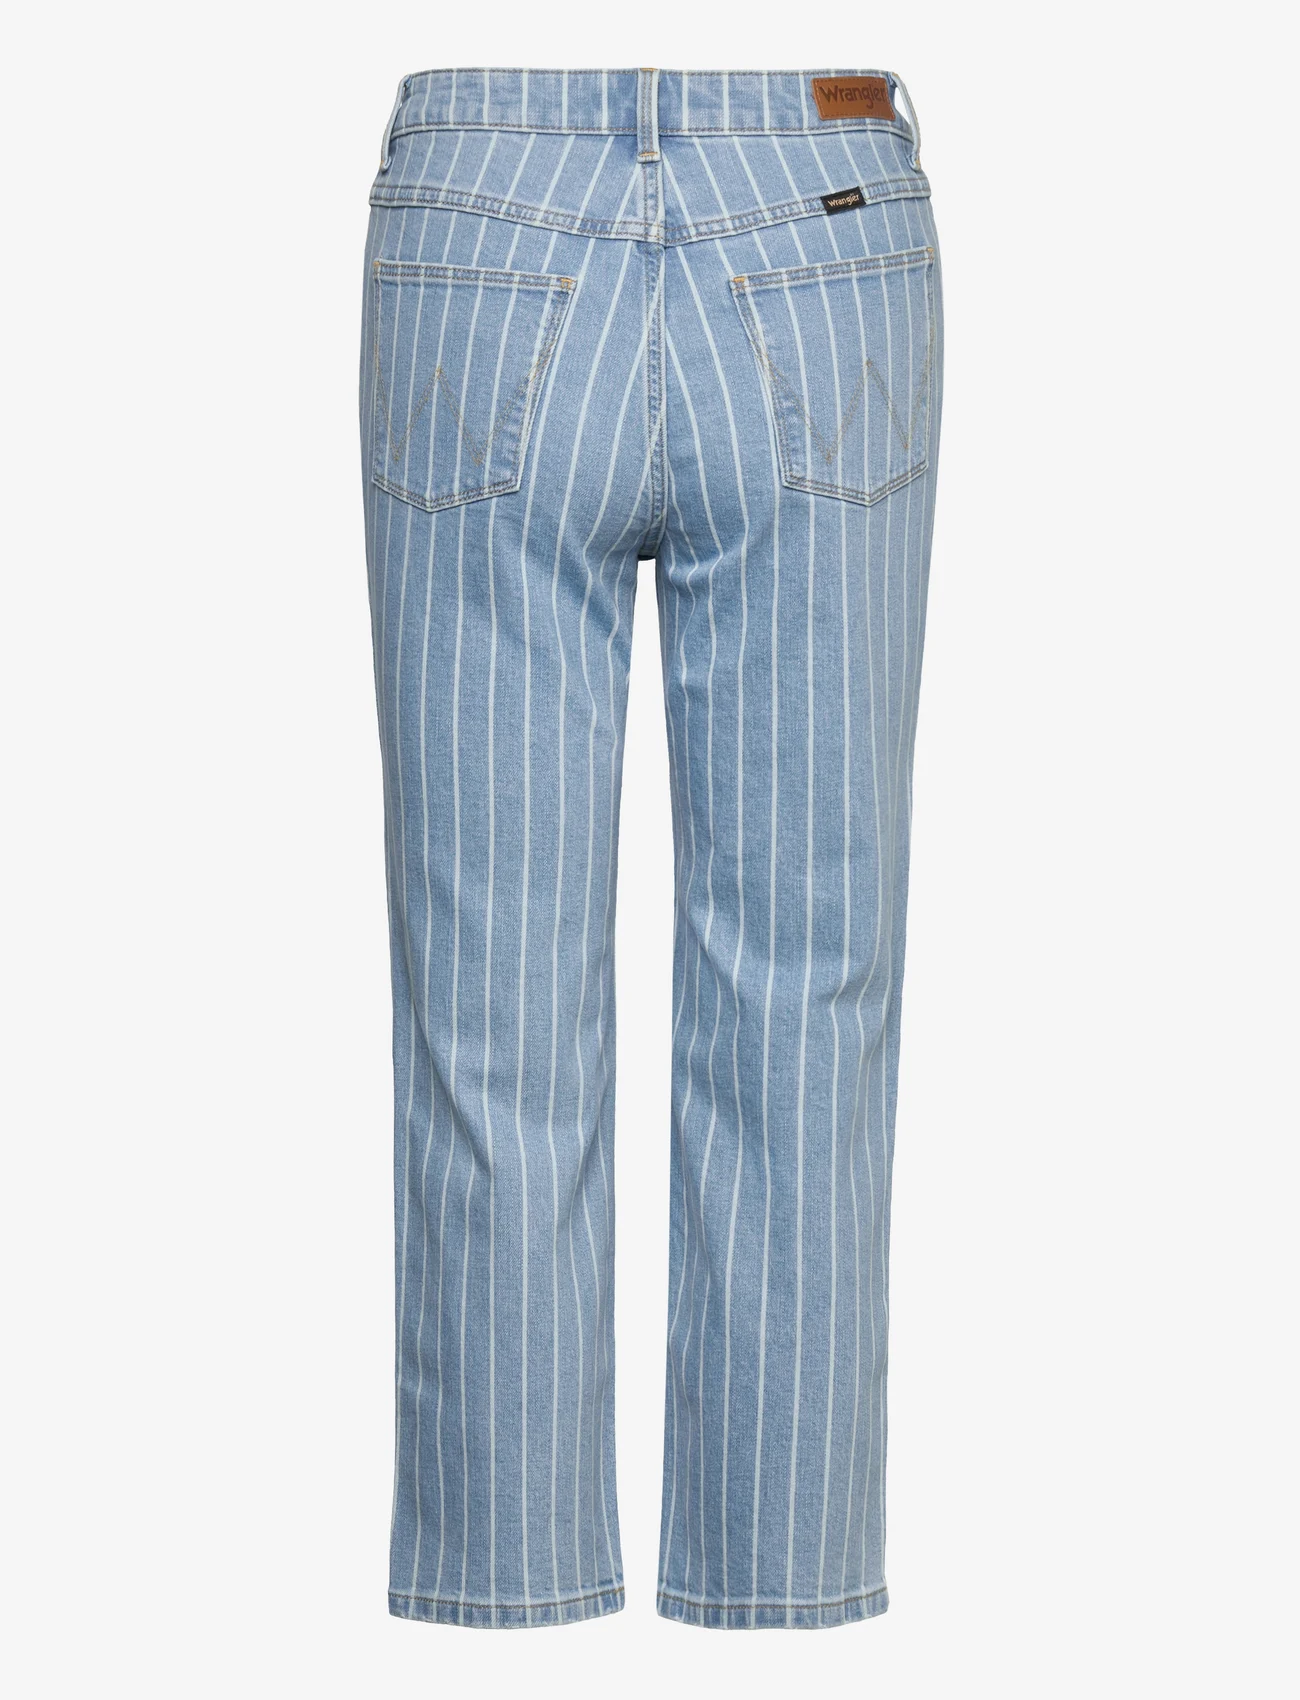 Wrangler - STRAIGHT CROP - raka jeans - stone stripe - 1